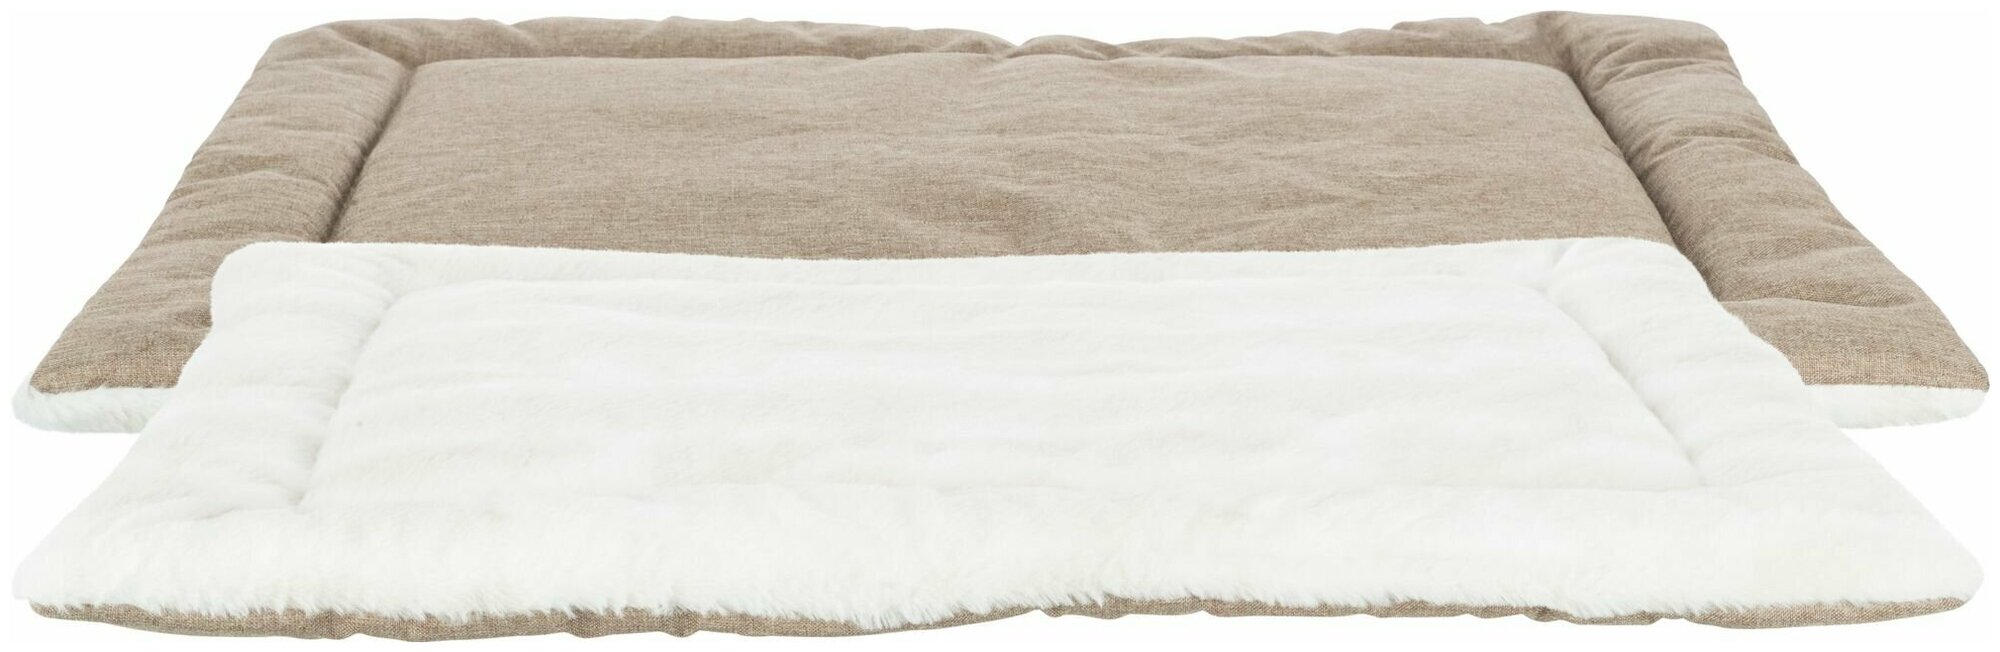 Лежак Nelli, 60 х 50 см, бело-серо-коричневый/светло-коричневый, Trixie (37285) - фотография № 1